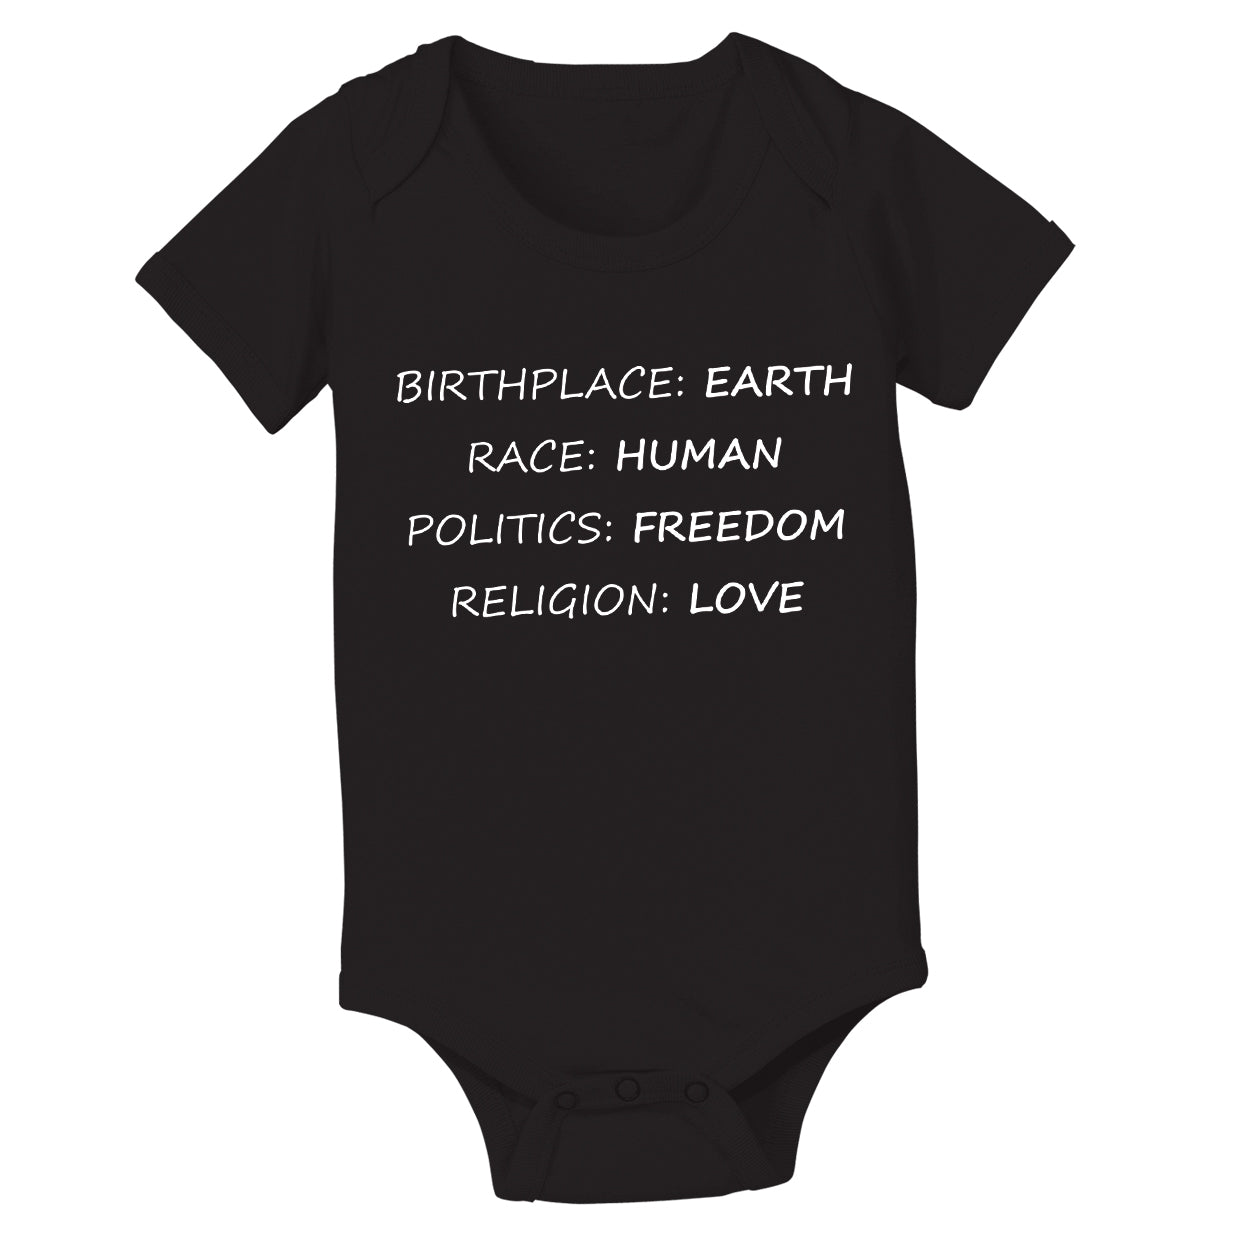 Birthplace Earth Kids Tshirt - Donkey Tees